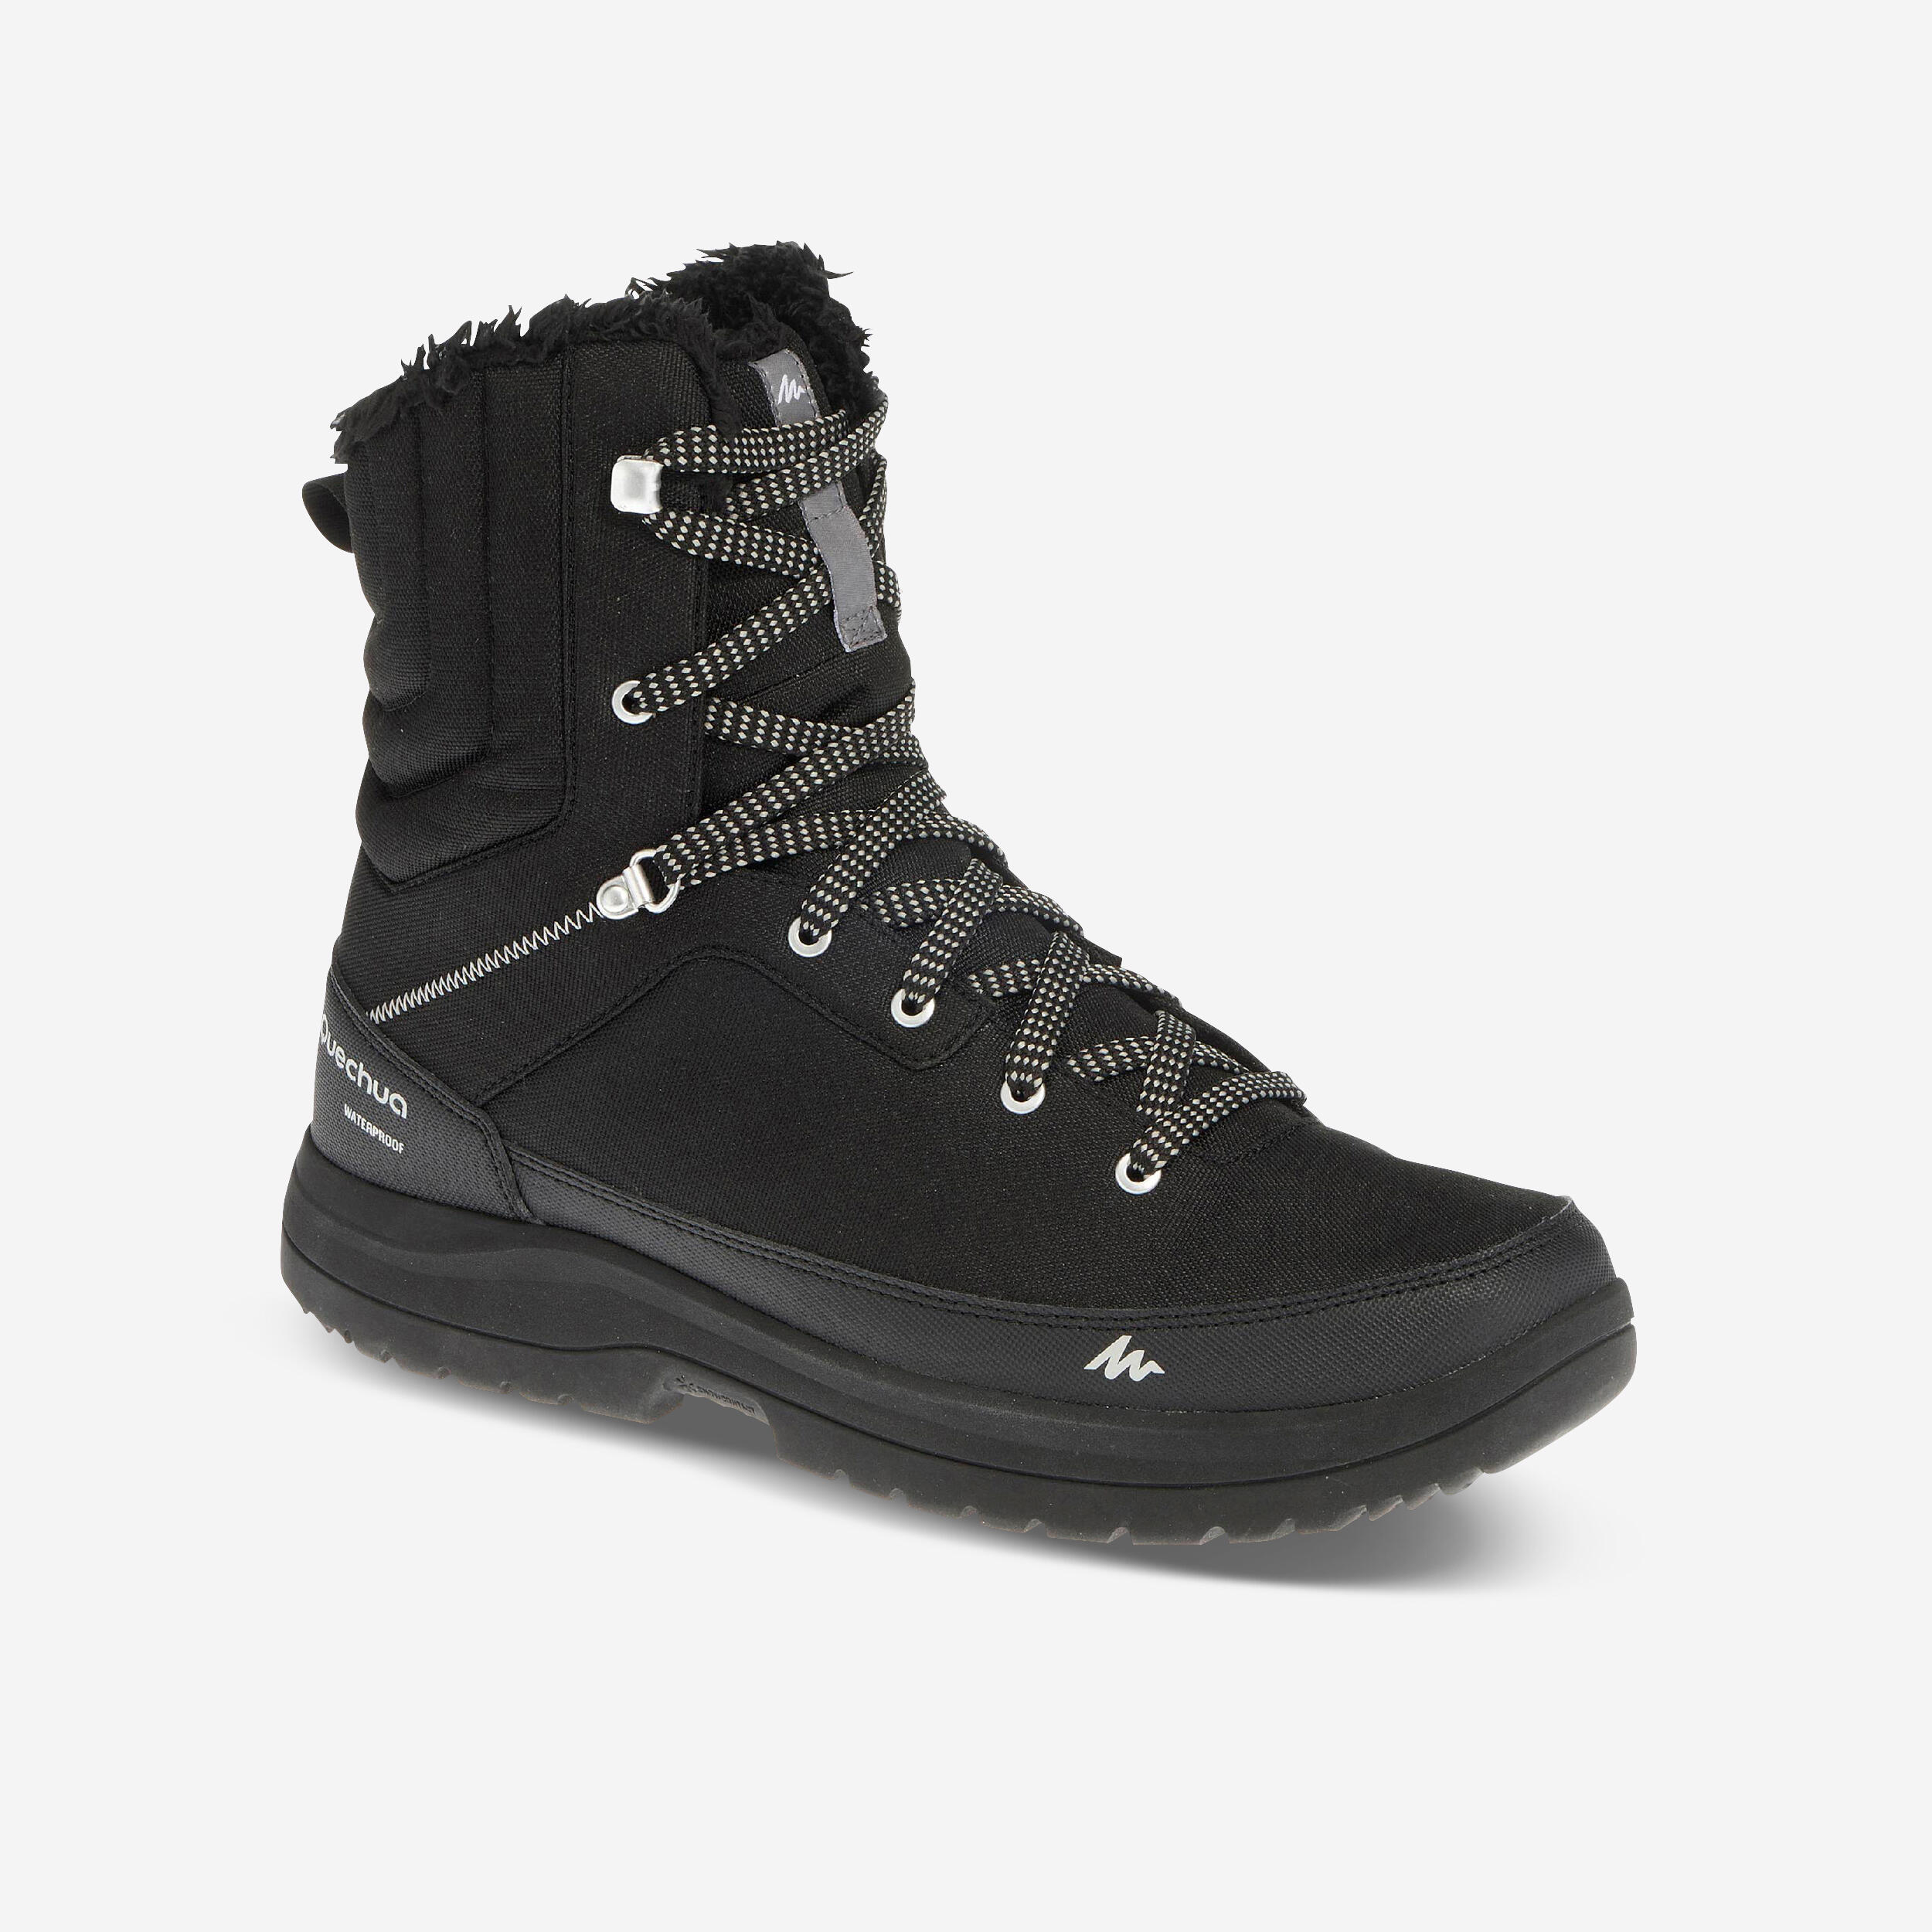 Men’s Waterproof Winter Boots - SH 100 Black - QUECHUA